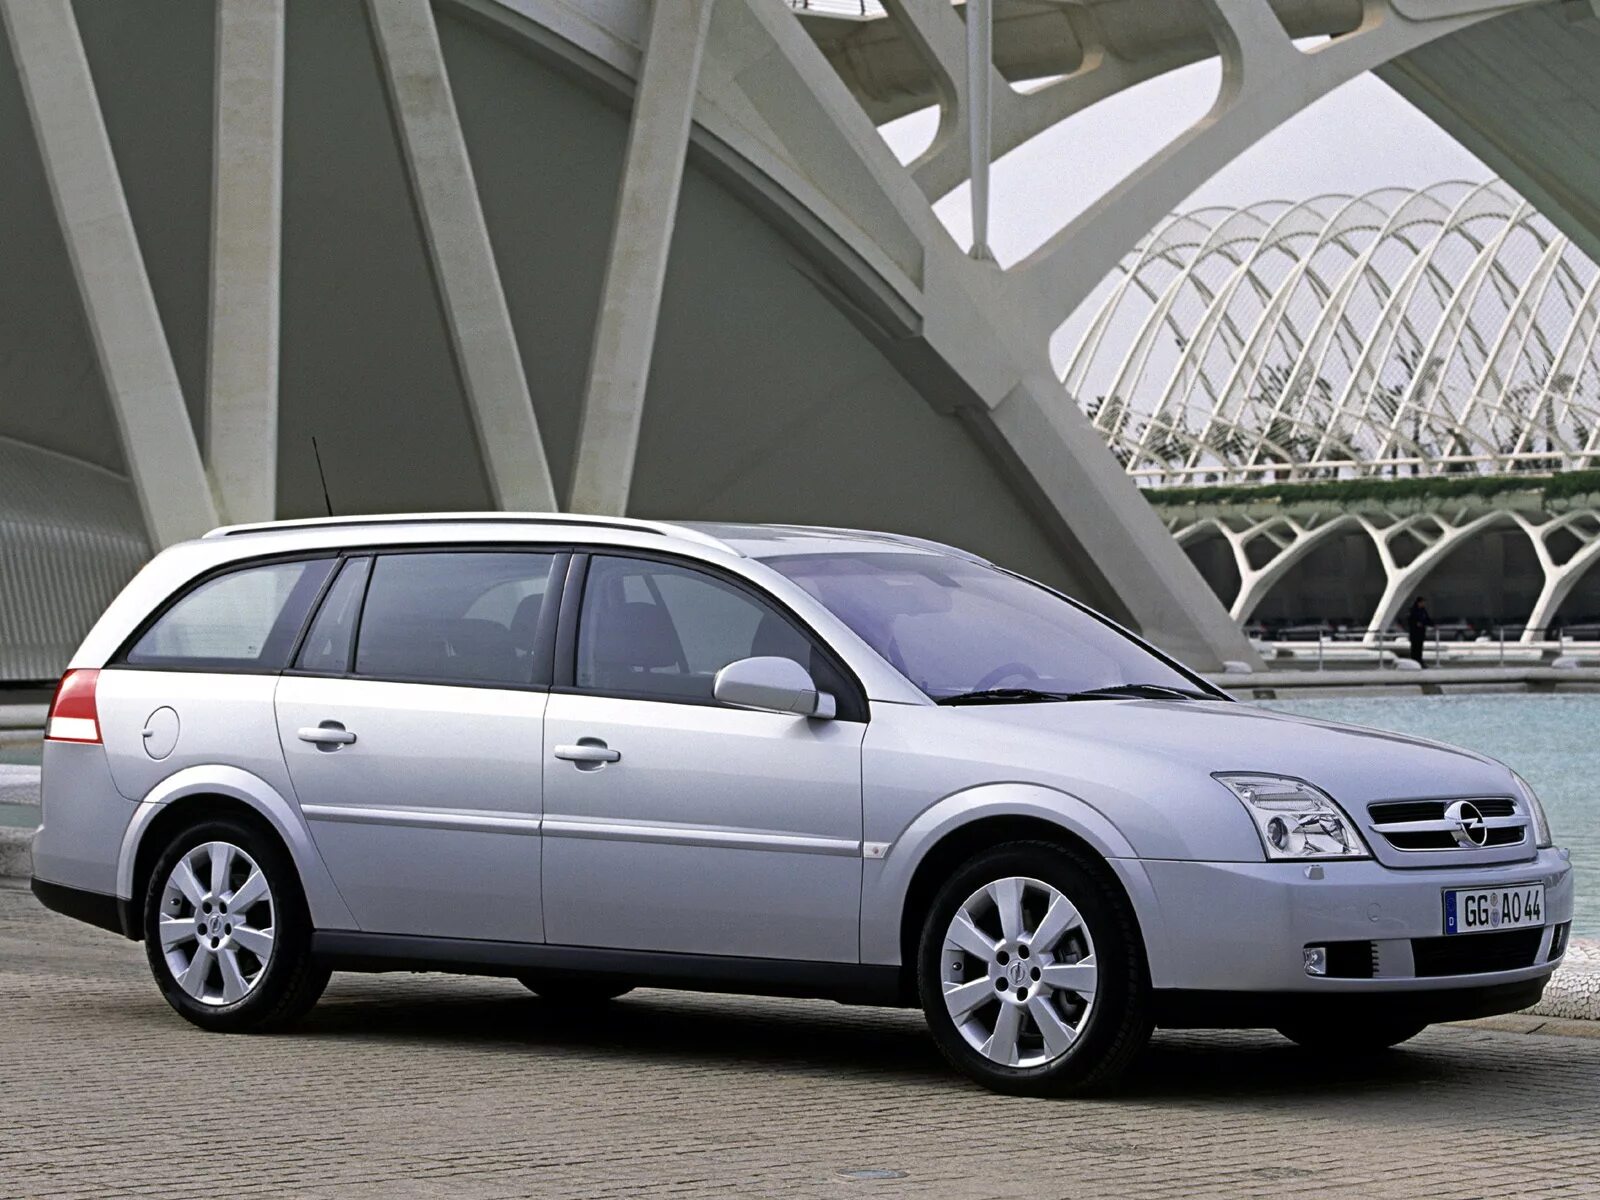 Опель Вектра 2004 универсал. Opel Vectra c 2003 универсал. Opel Vectra c 2004 универсал. Опель Вектра с 2005 универсал. Опель вектра караван